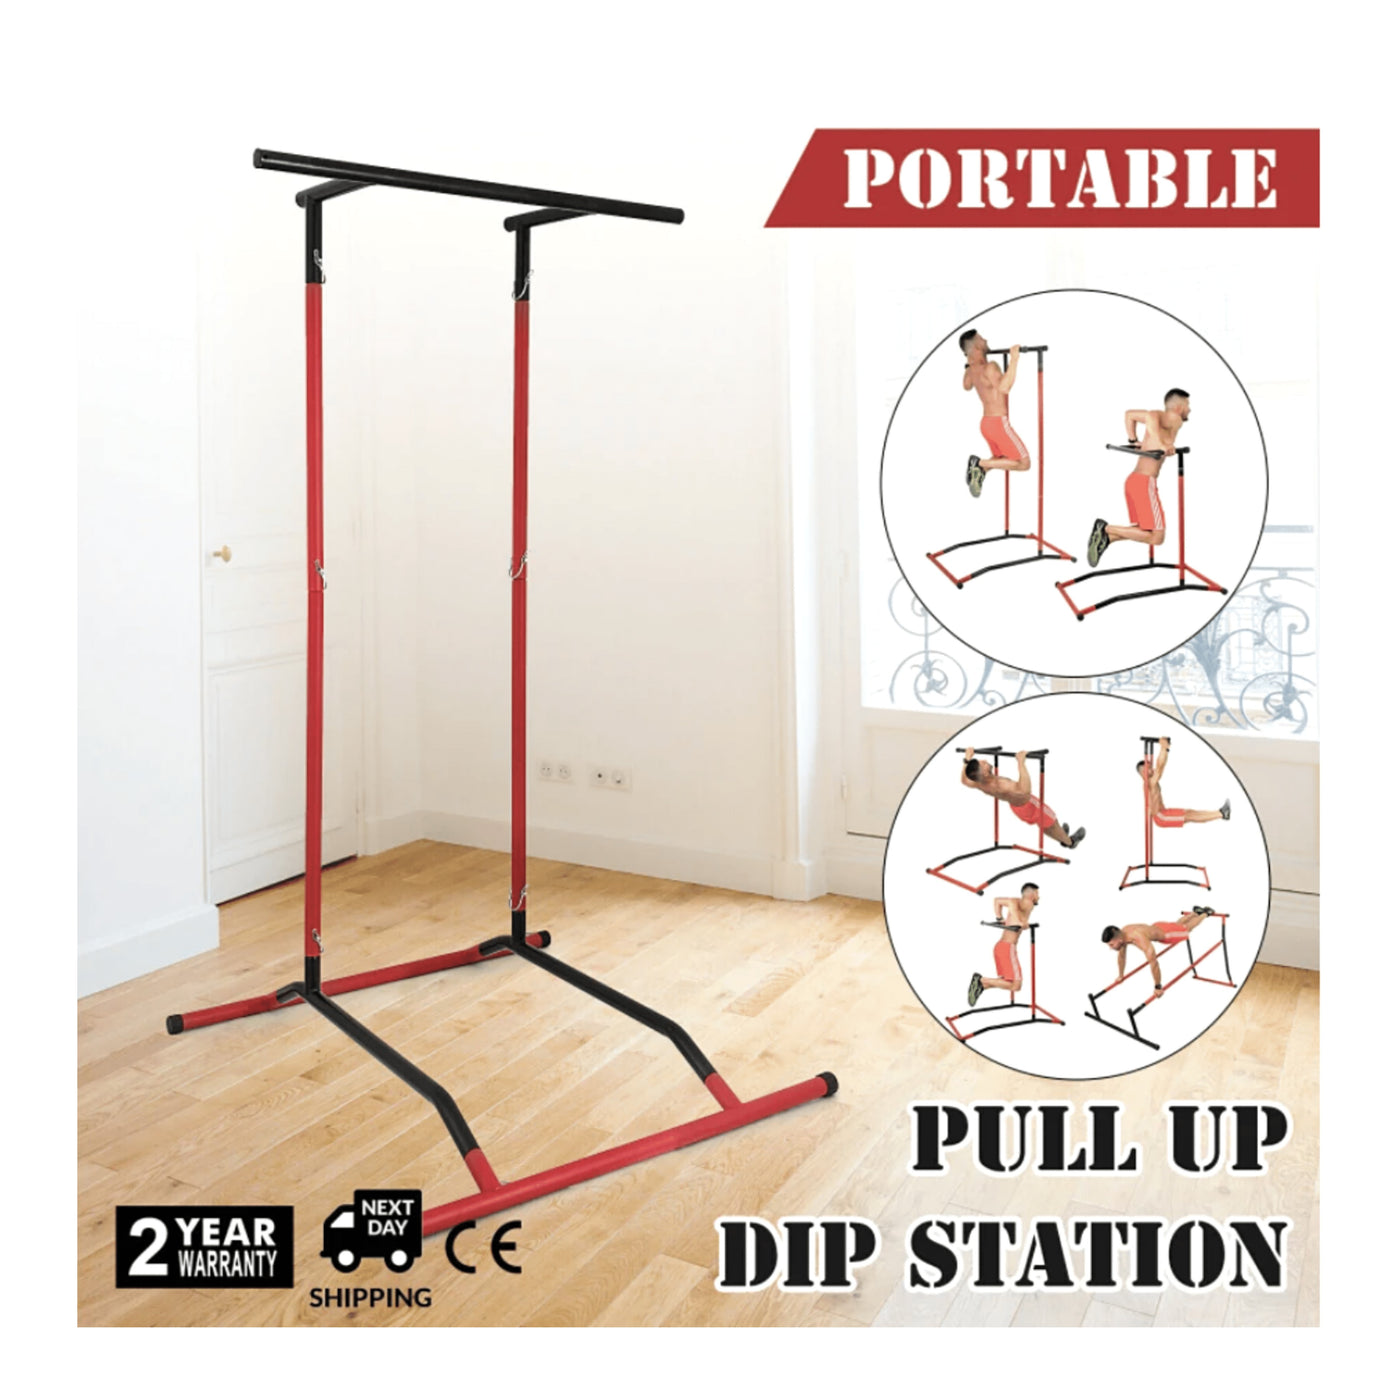 Portable Pull-up Bar & Dip Station | Pull-up Dip Station Swimcore